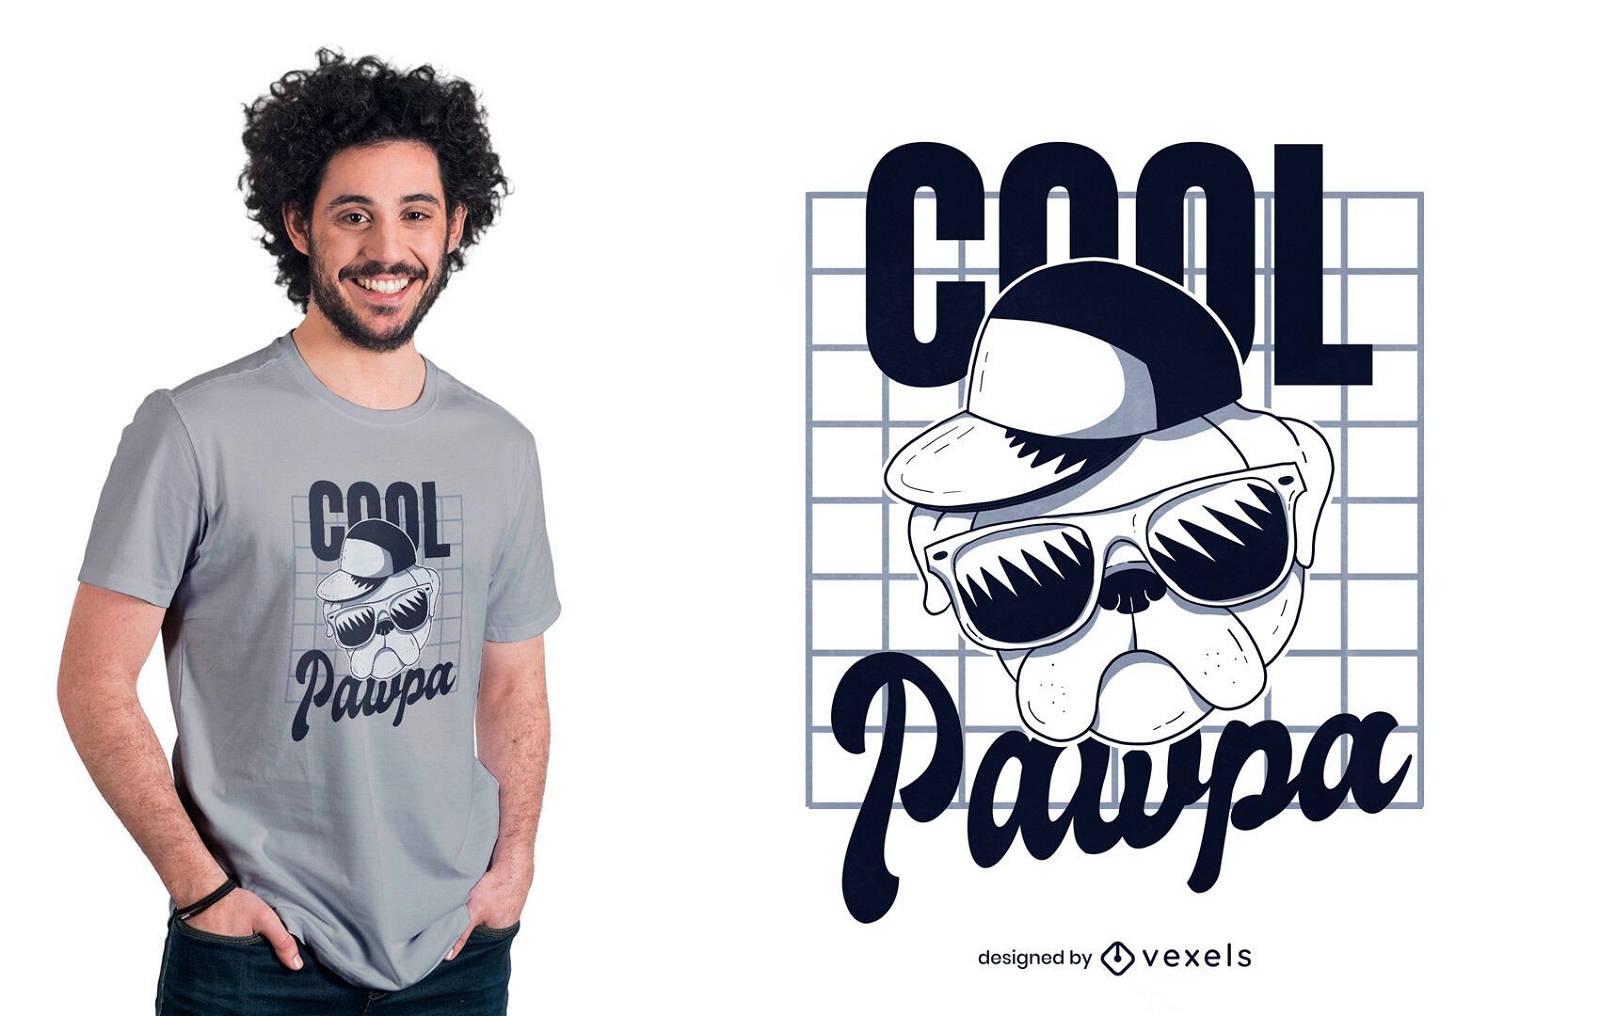 Cool pawpa t-shirt design